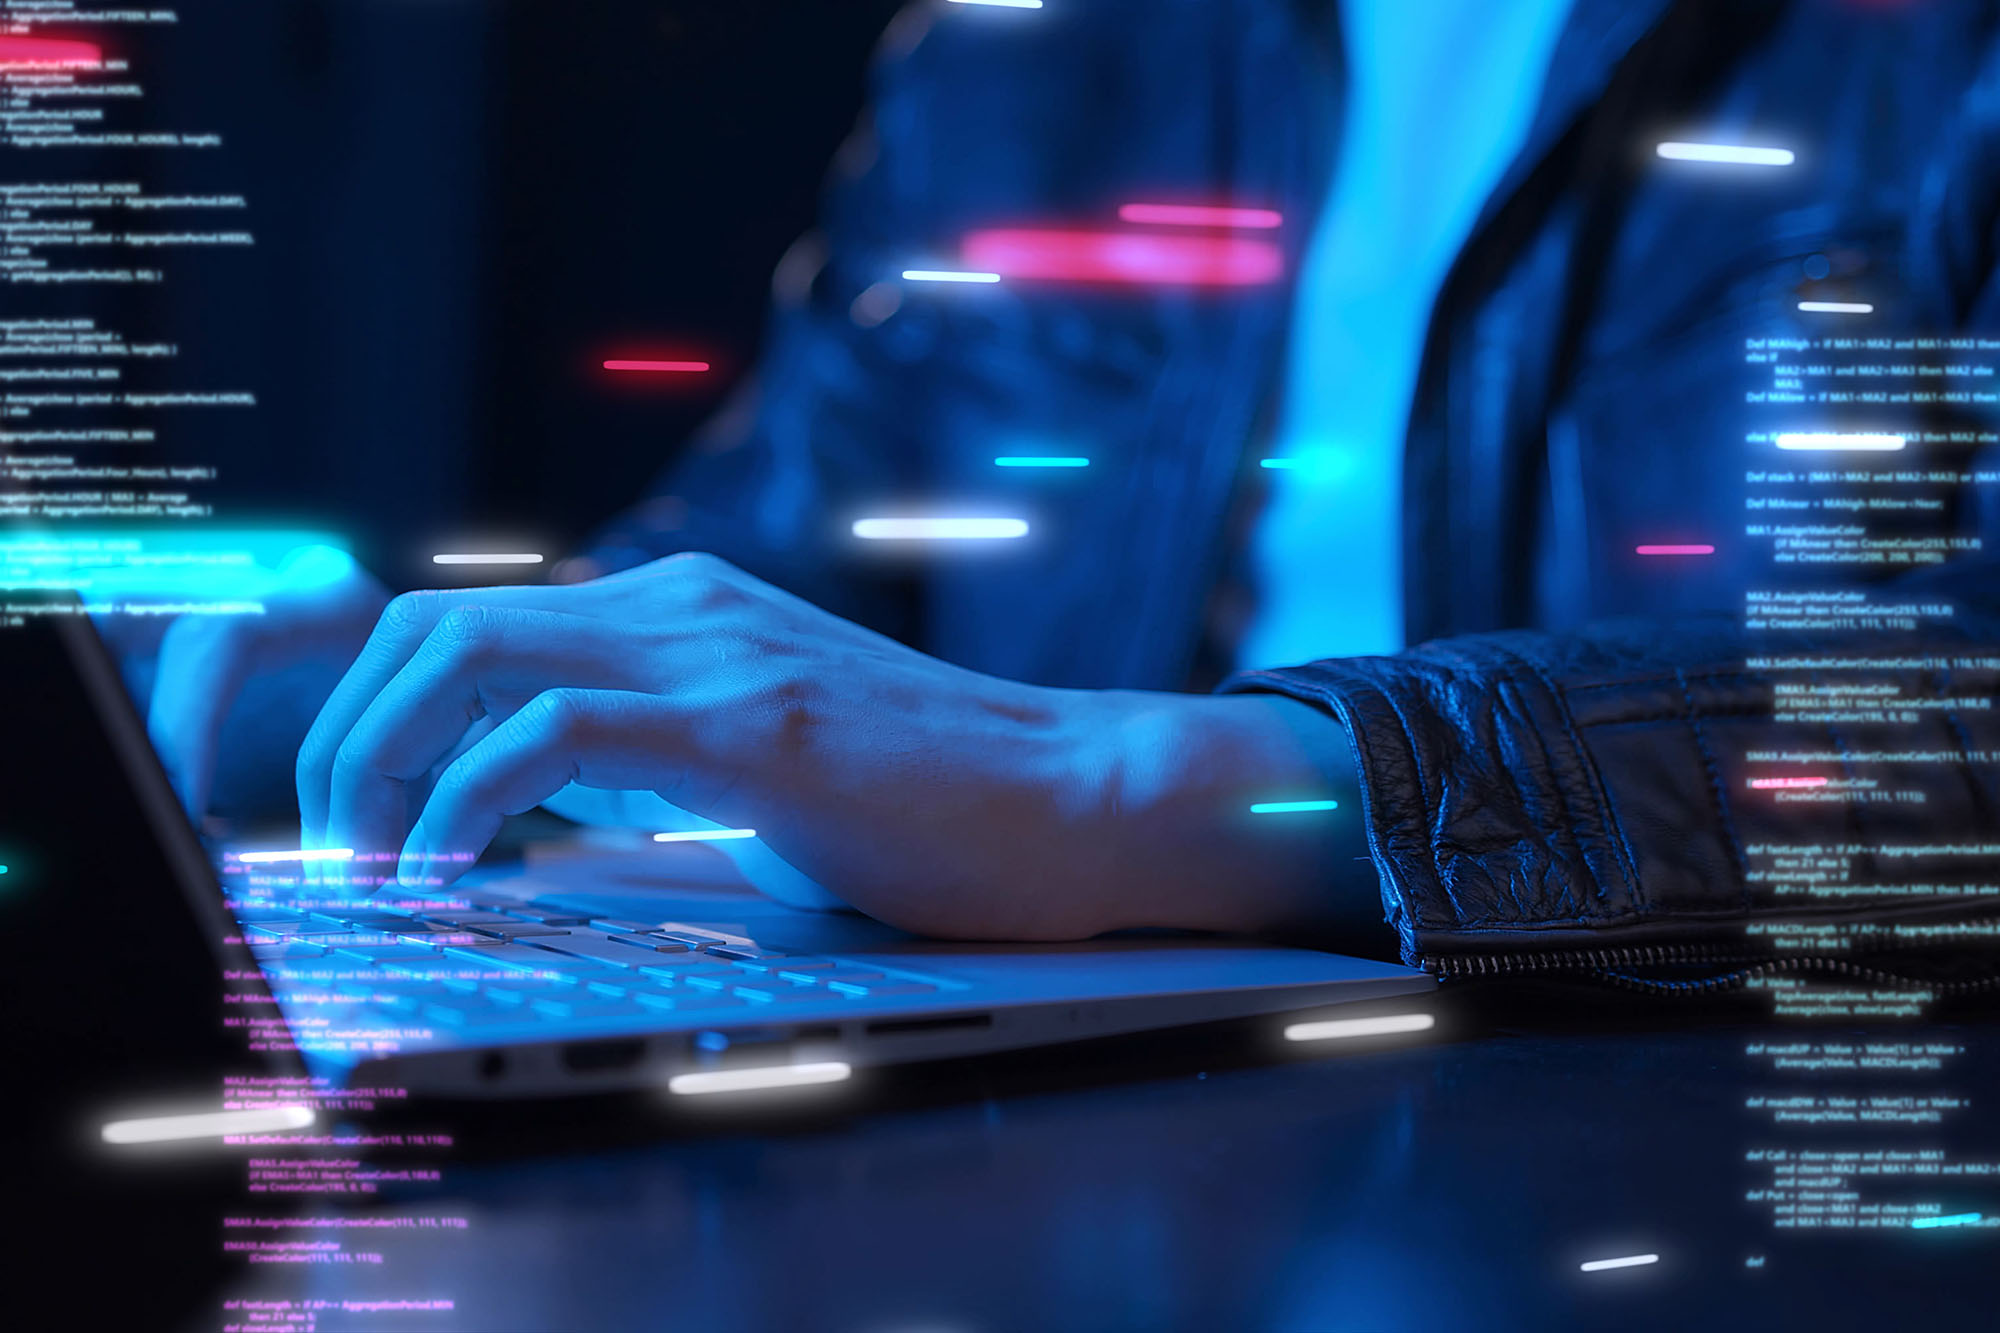 Kim Komando: Do this if a hacker breaks into your computer